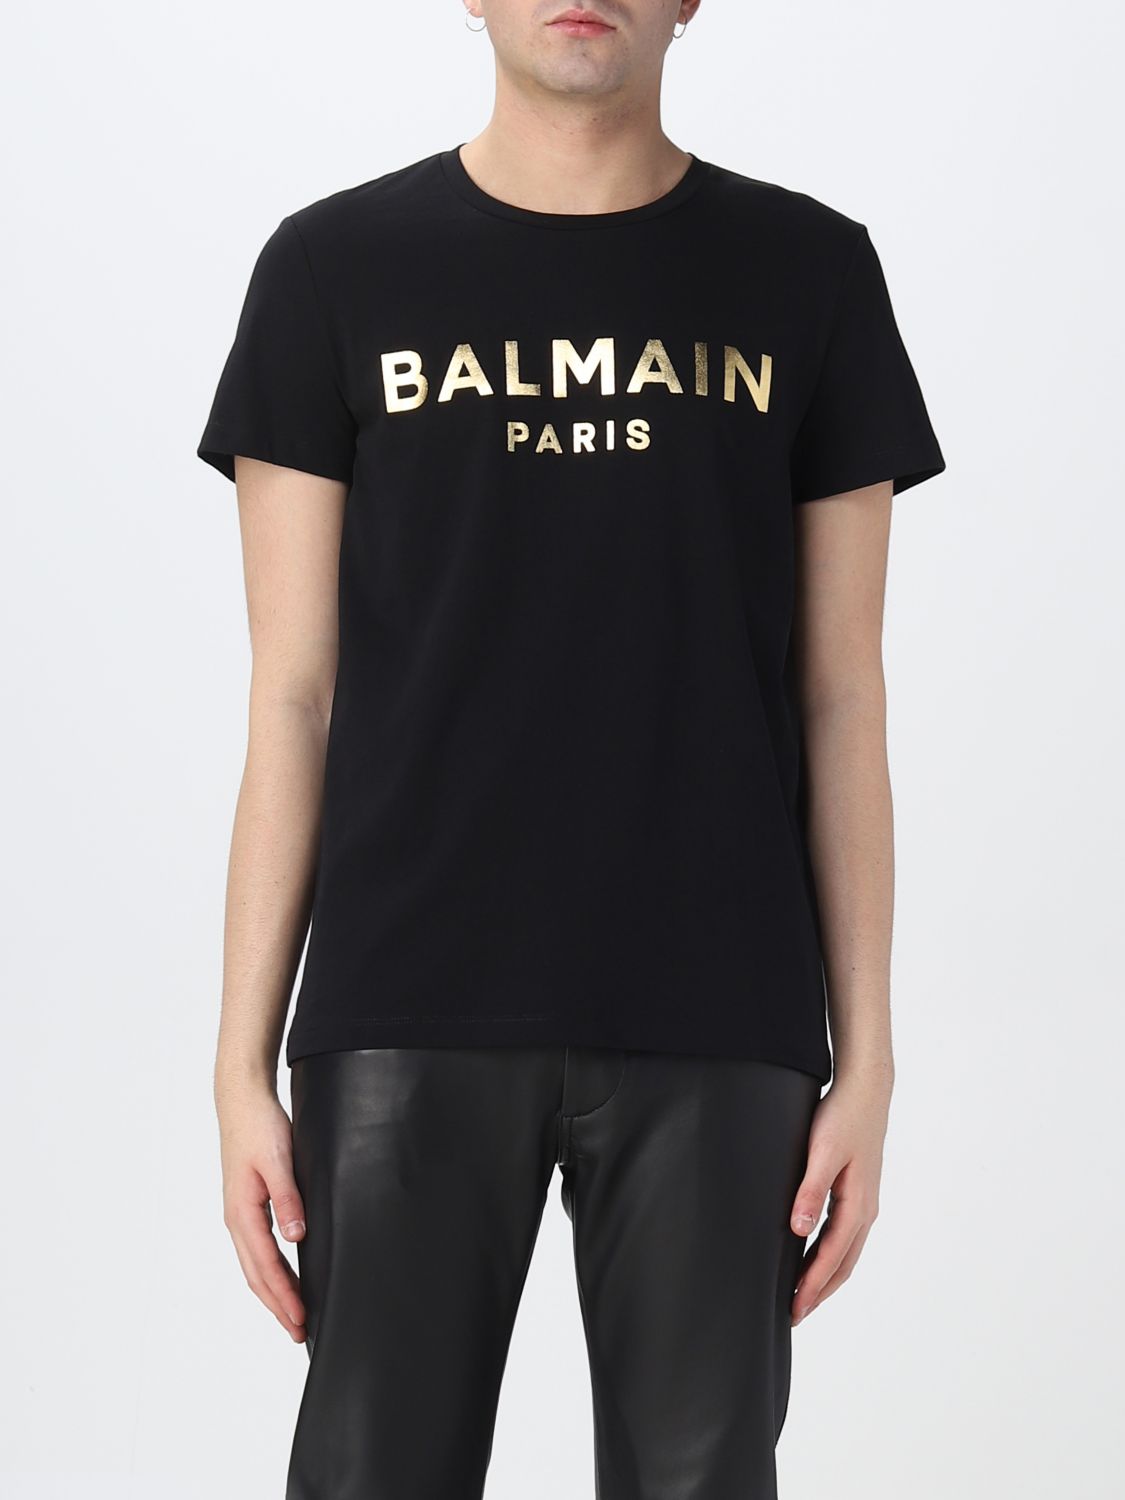 Balmain Outlet: t-shirt in cotton with laminated logo - Black | Balmain